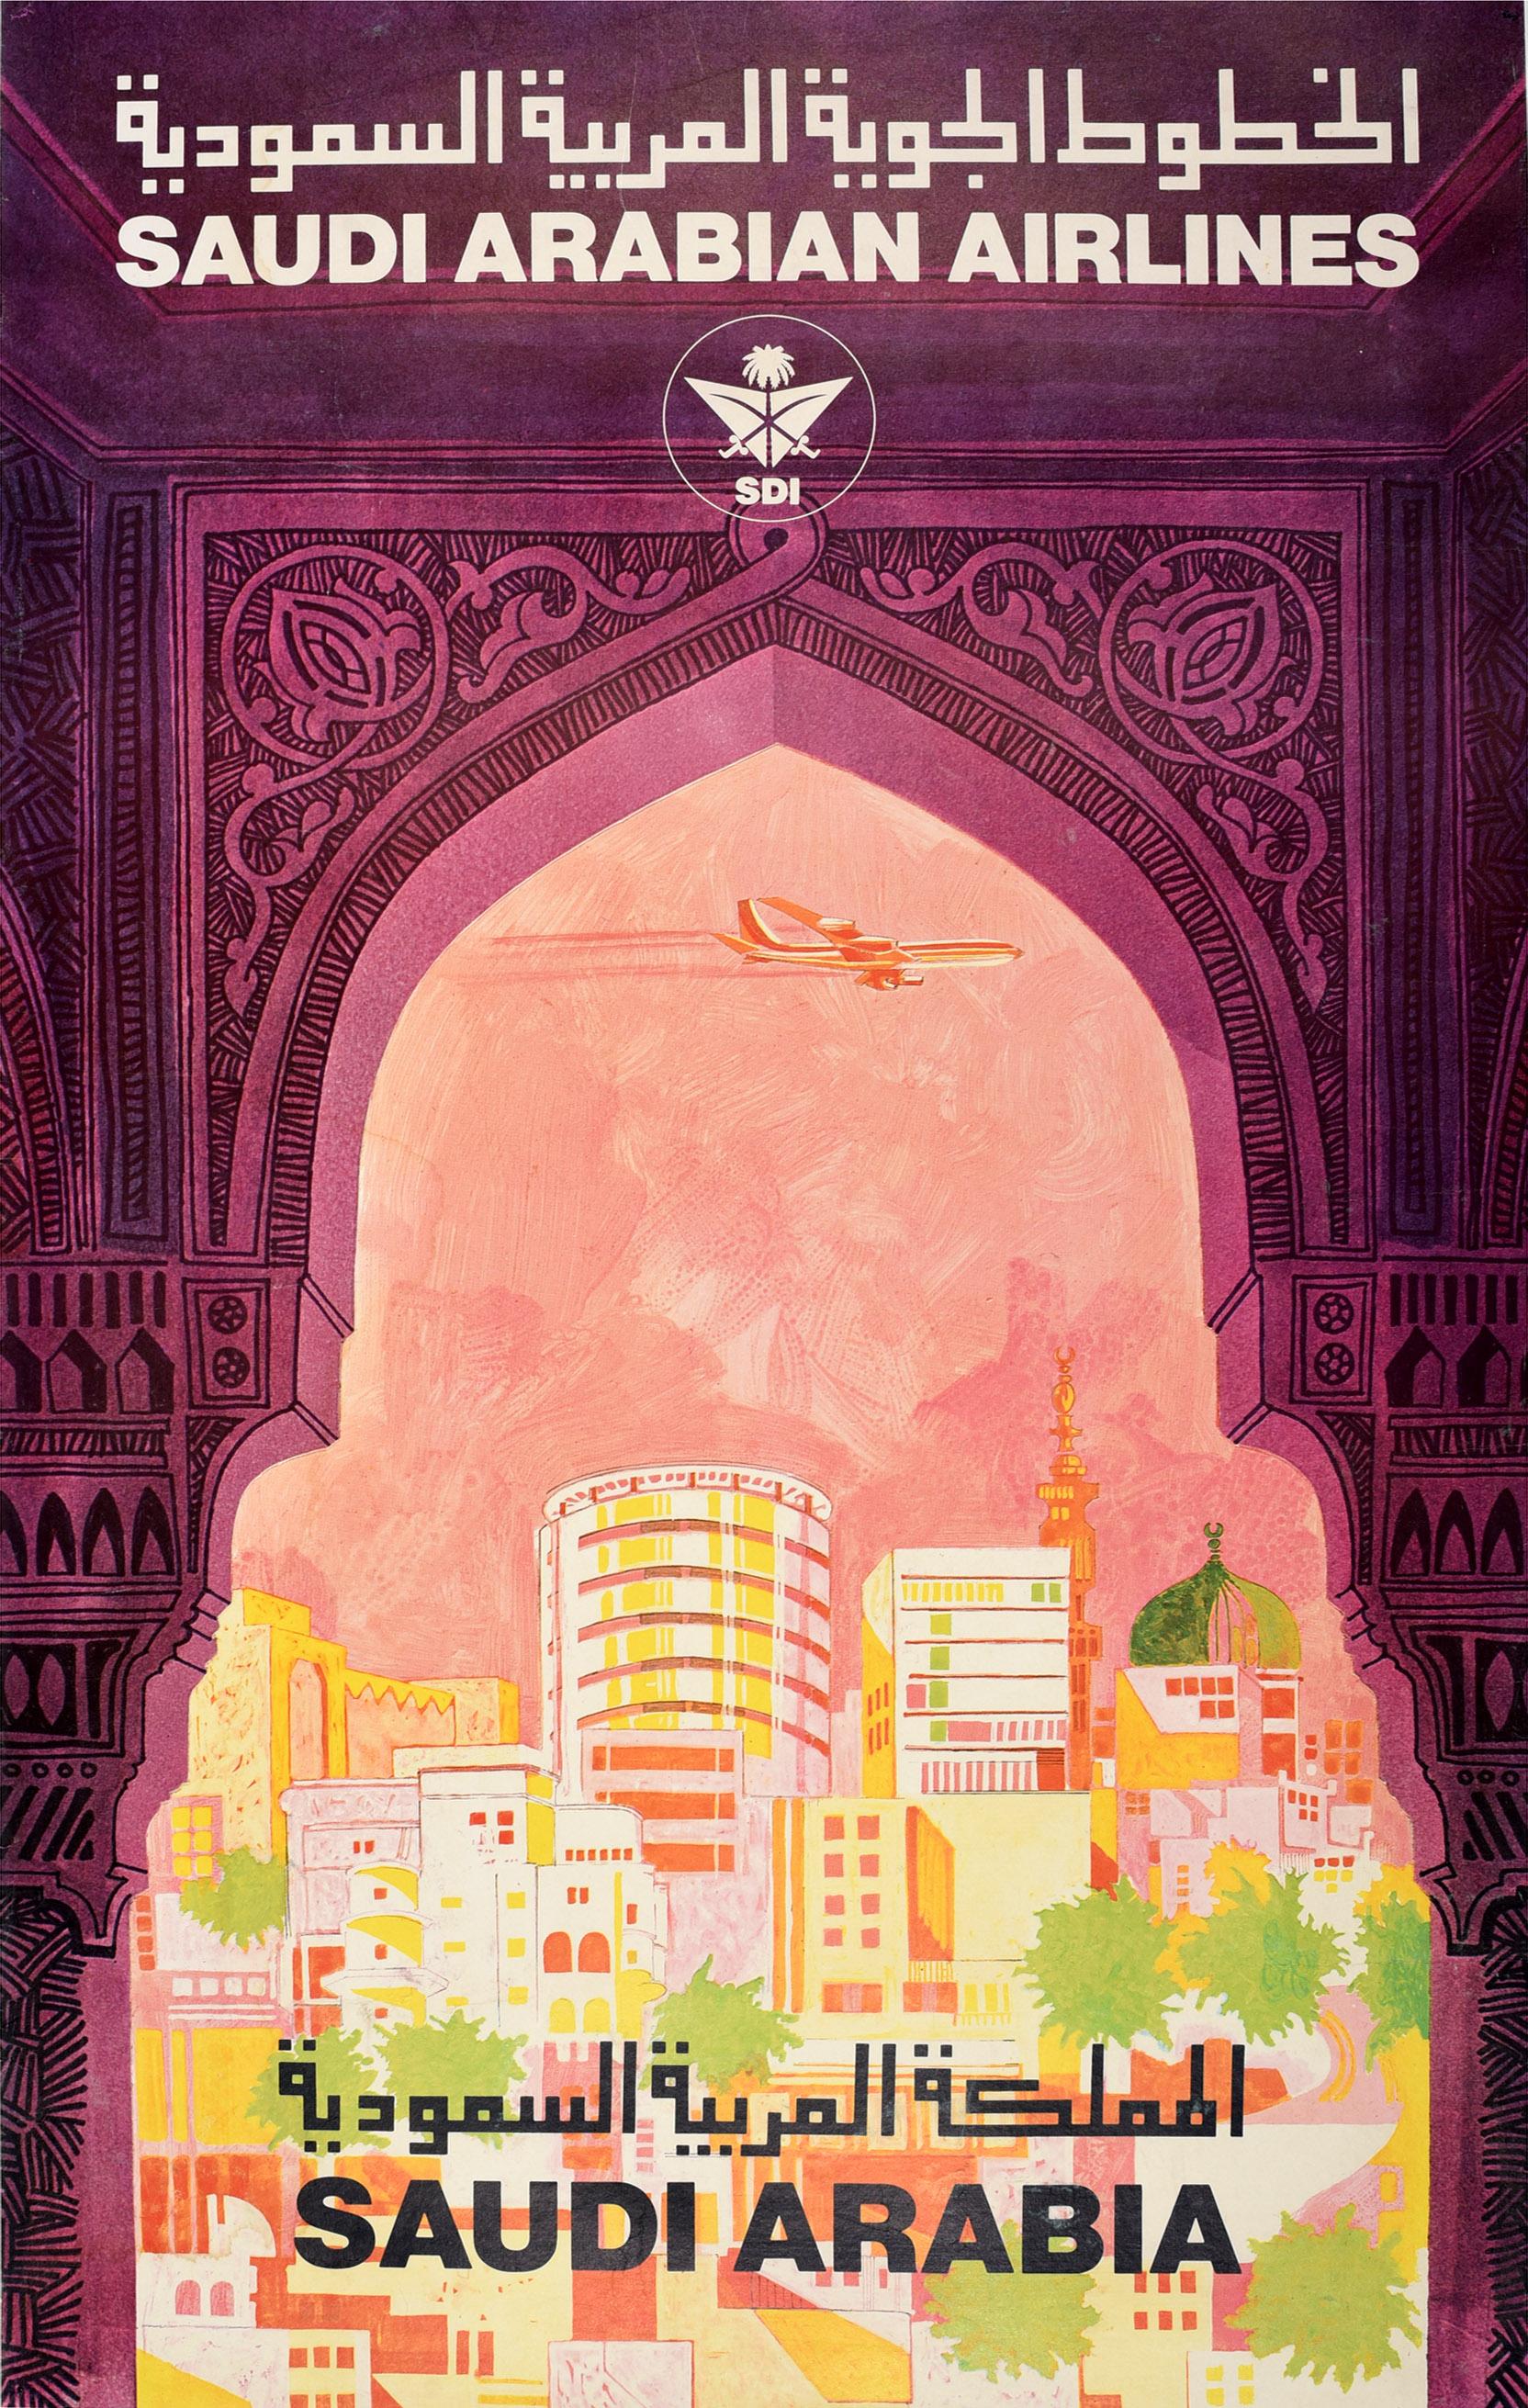 Unknown Print - Original Vintage Middle East Travel Poster Saudi Arabian Airlines SDI Saudia